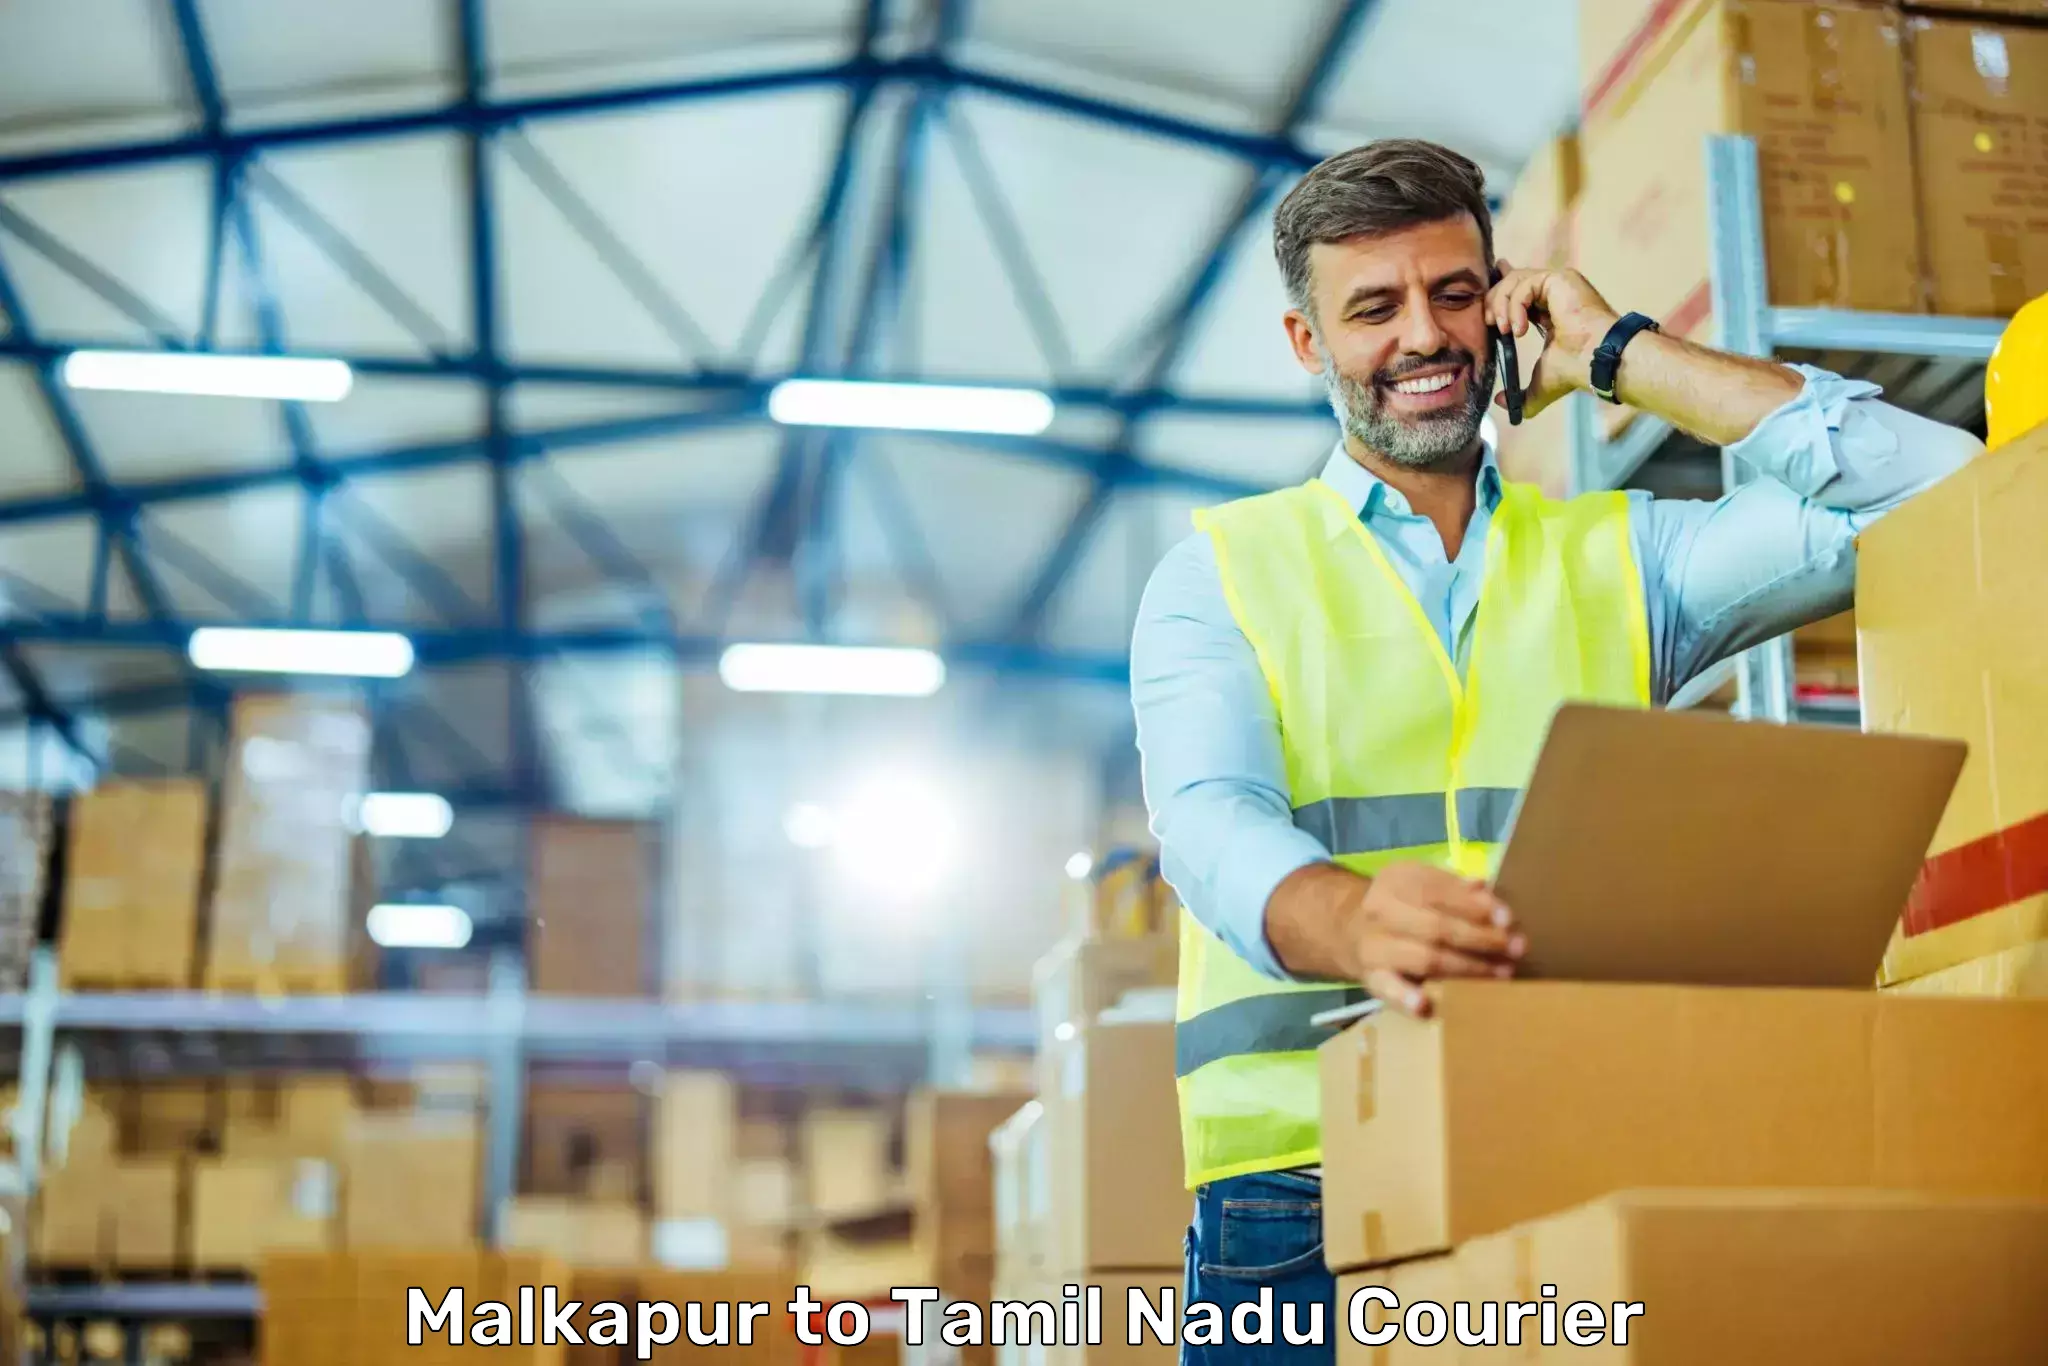 User-friendly delivery service Malkapur to Tiruchi